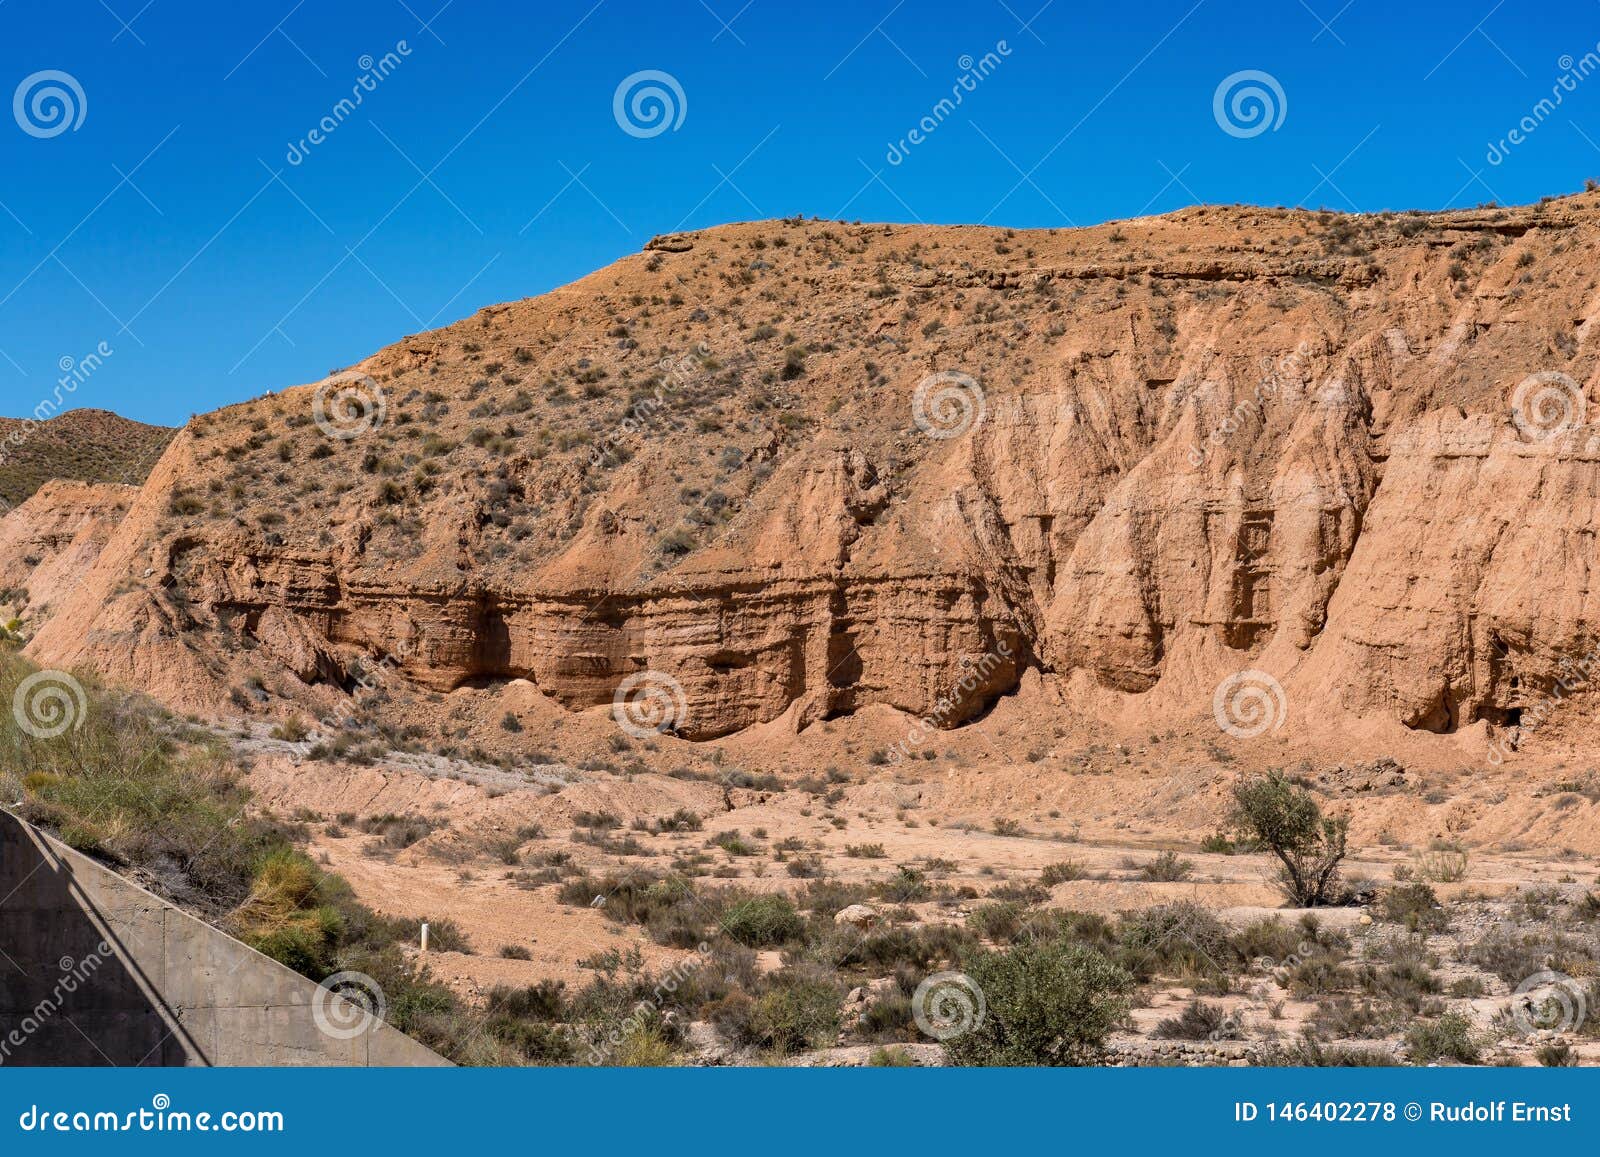 tabernas desert, in spanish desierto de tabernas, andalusia, spain